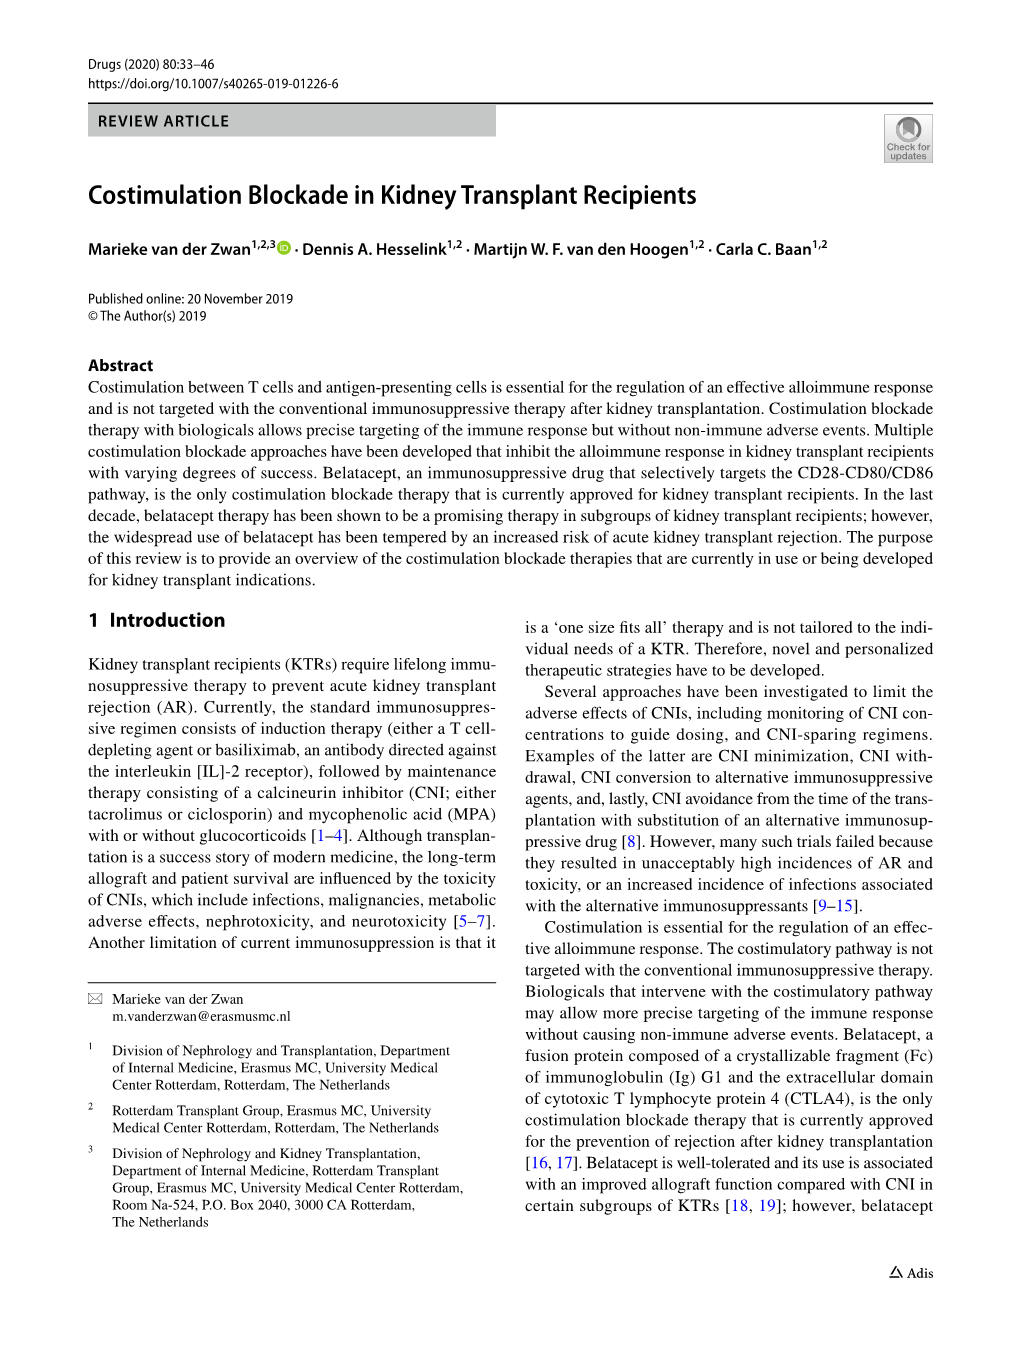 Costimulation Blockade in Kidney Transplant Recipients